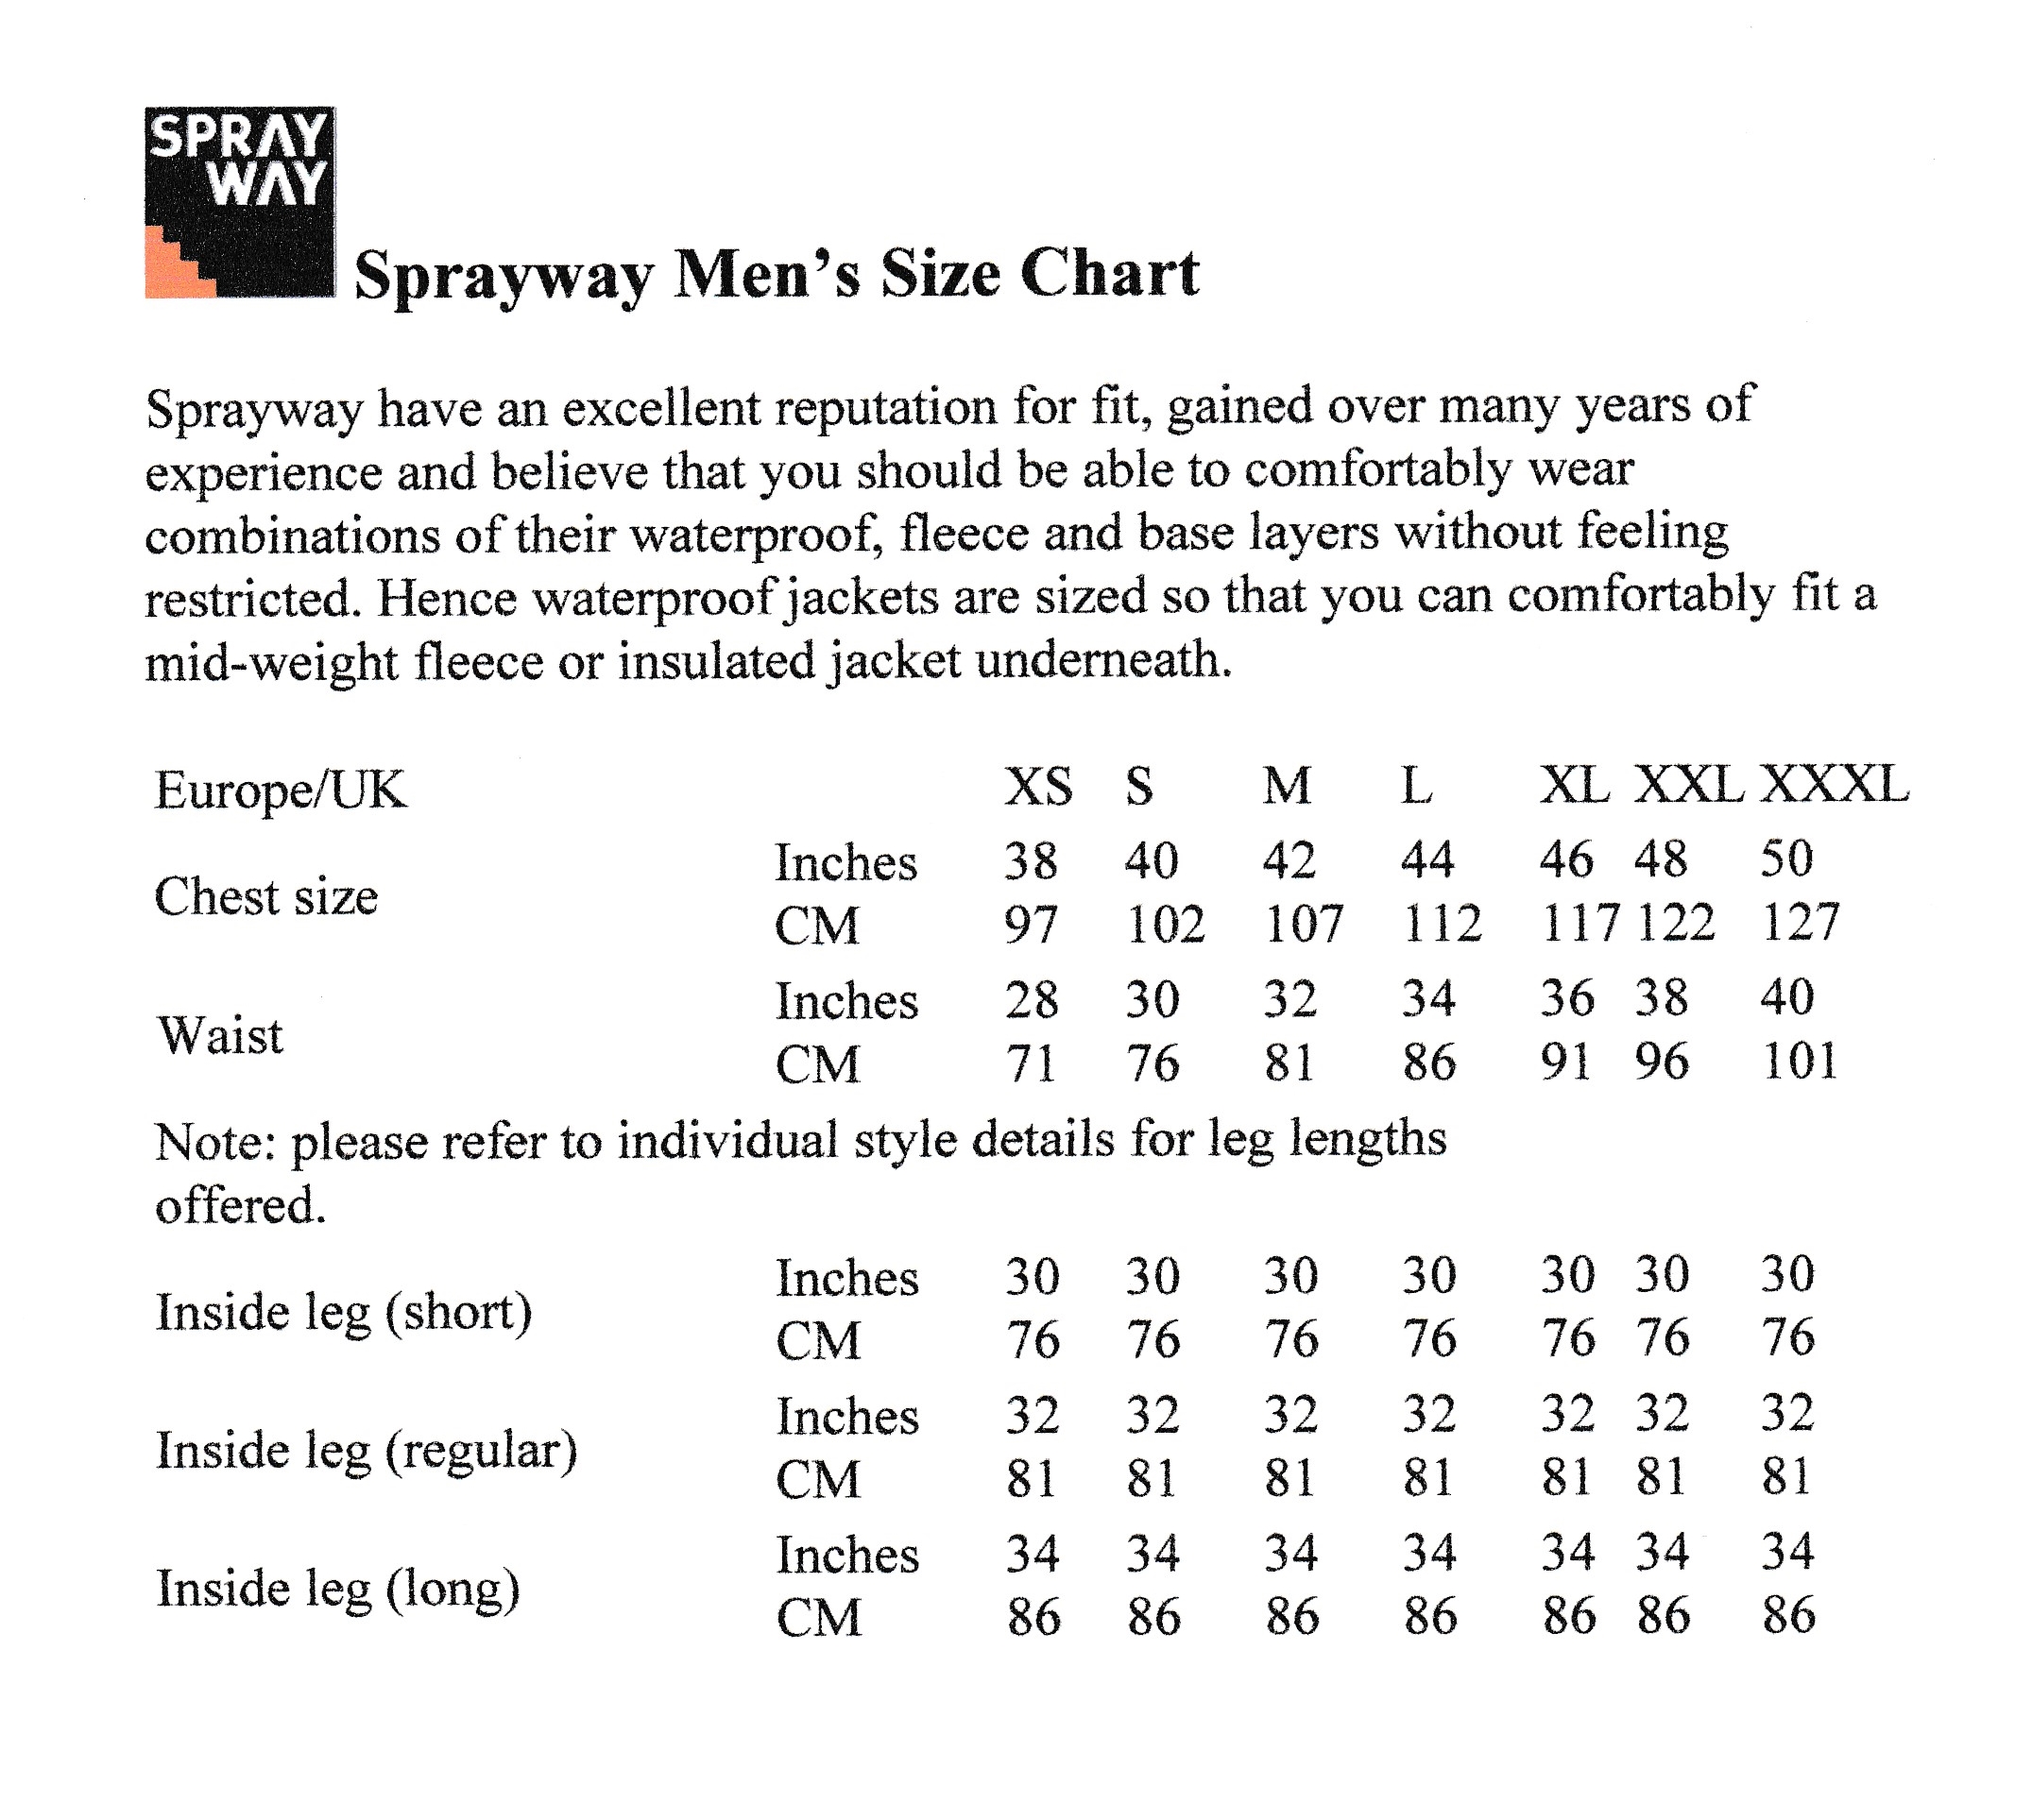 Sprayway Men's Size Chart.jpg